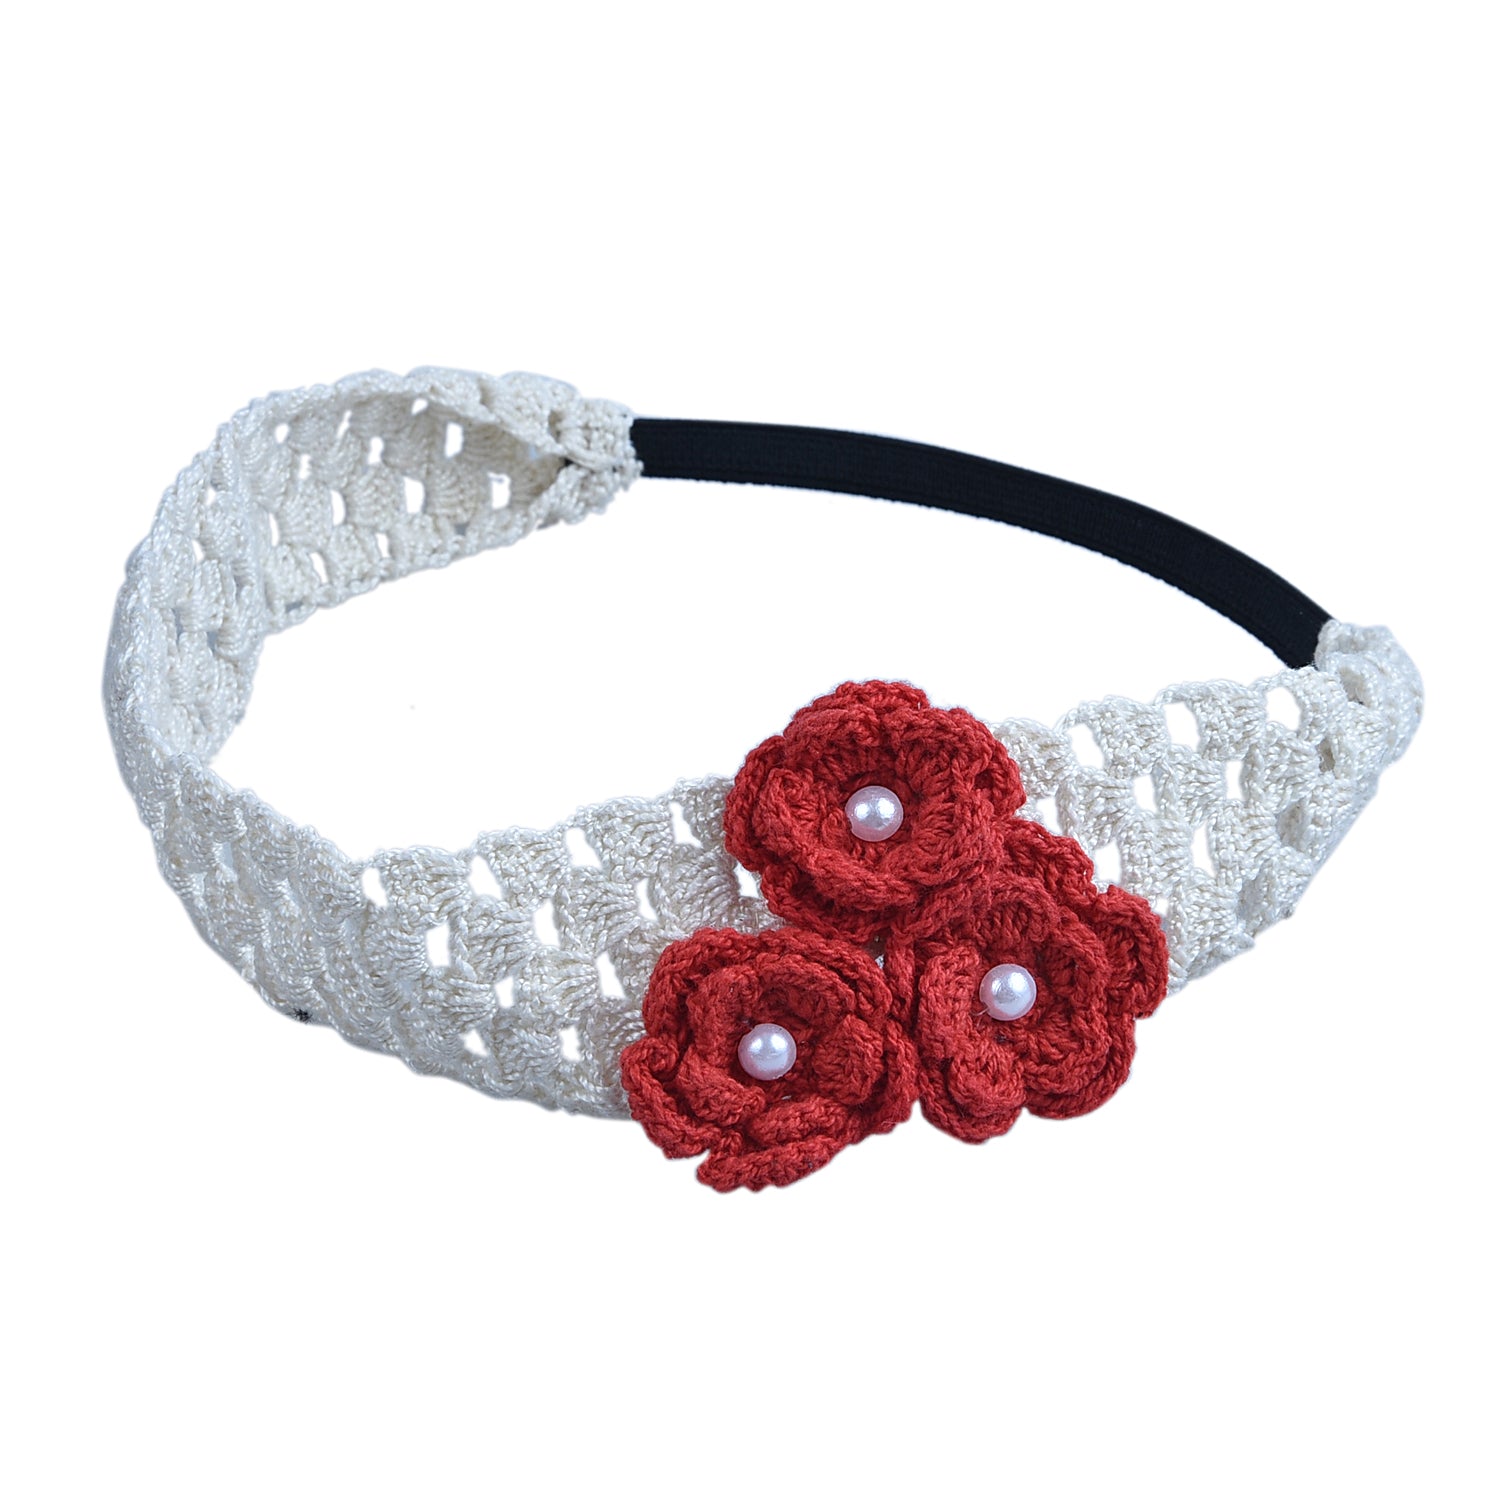 Handmade Crochet Headband With Crochet Flowers - Red